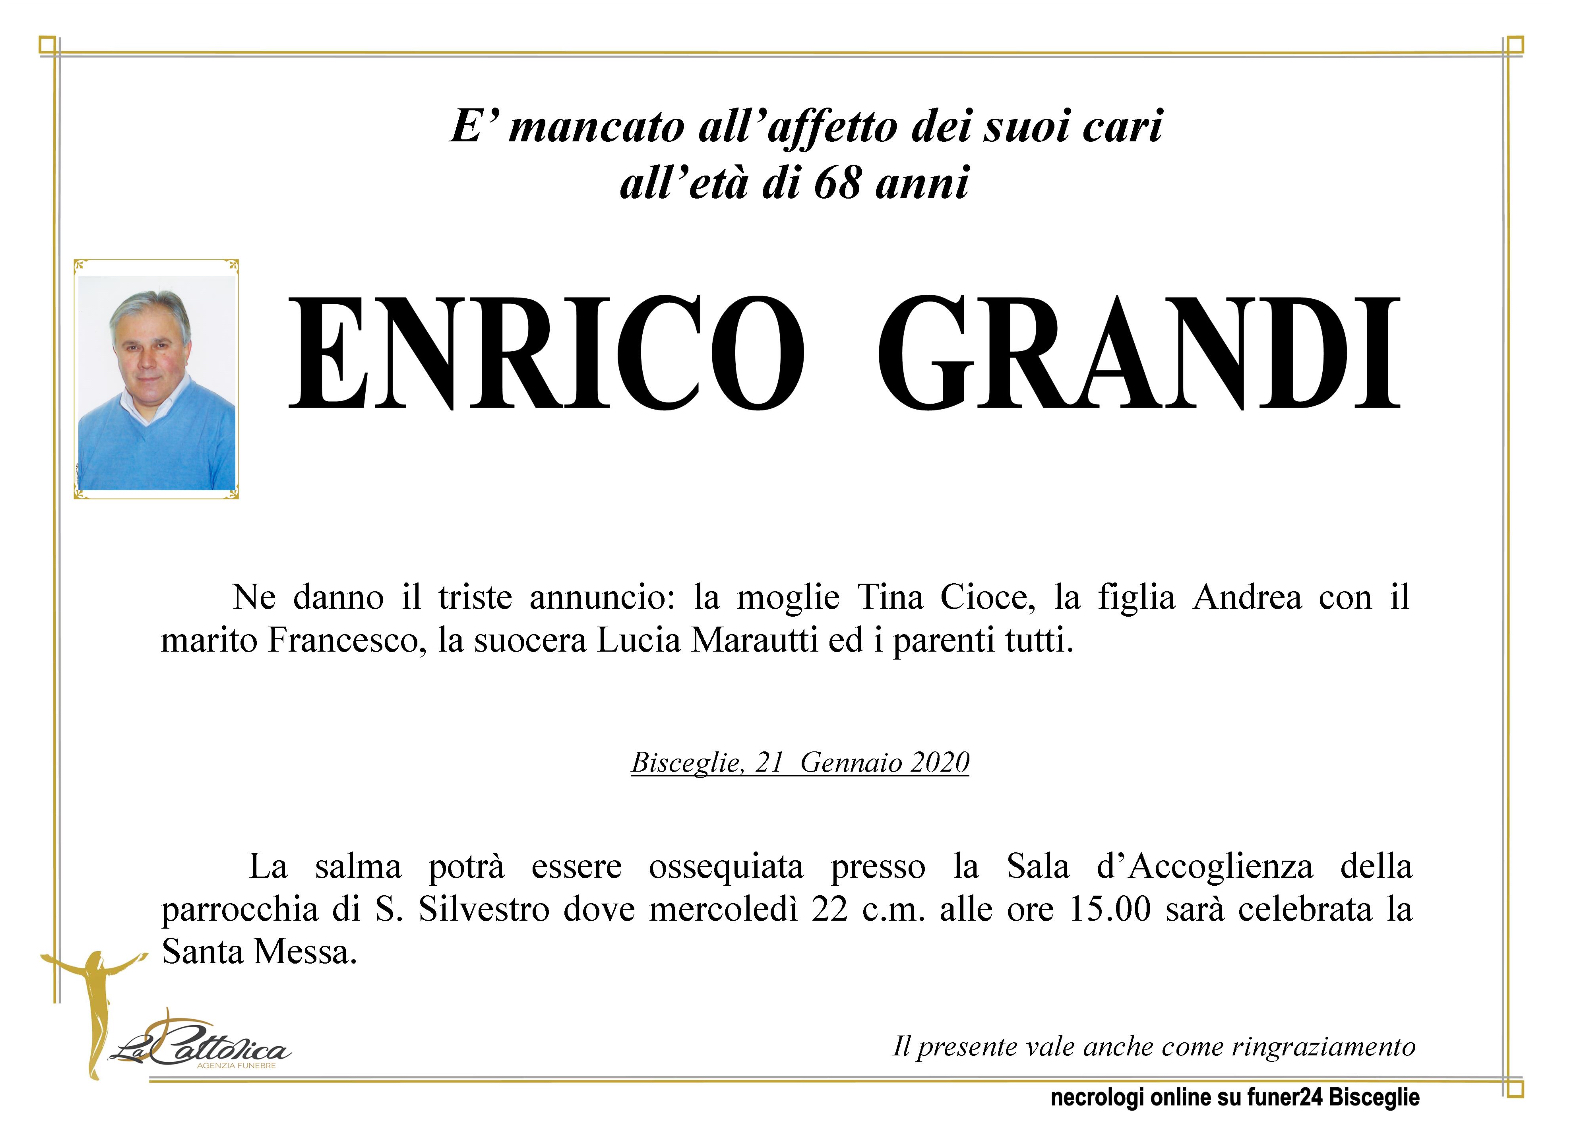 Enrico Grandi